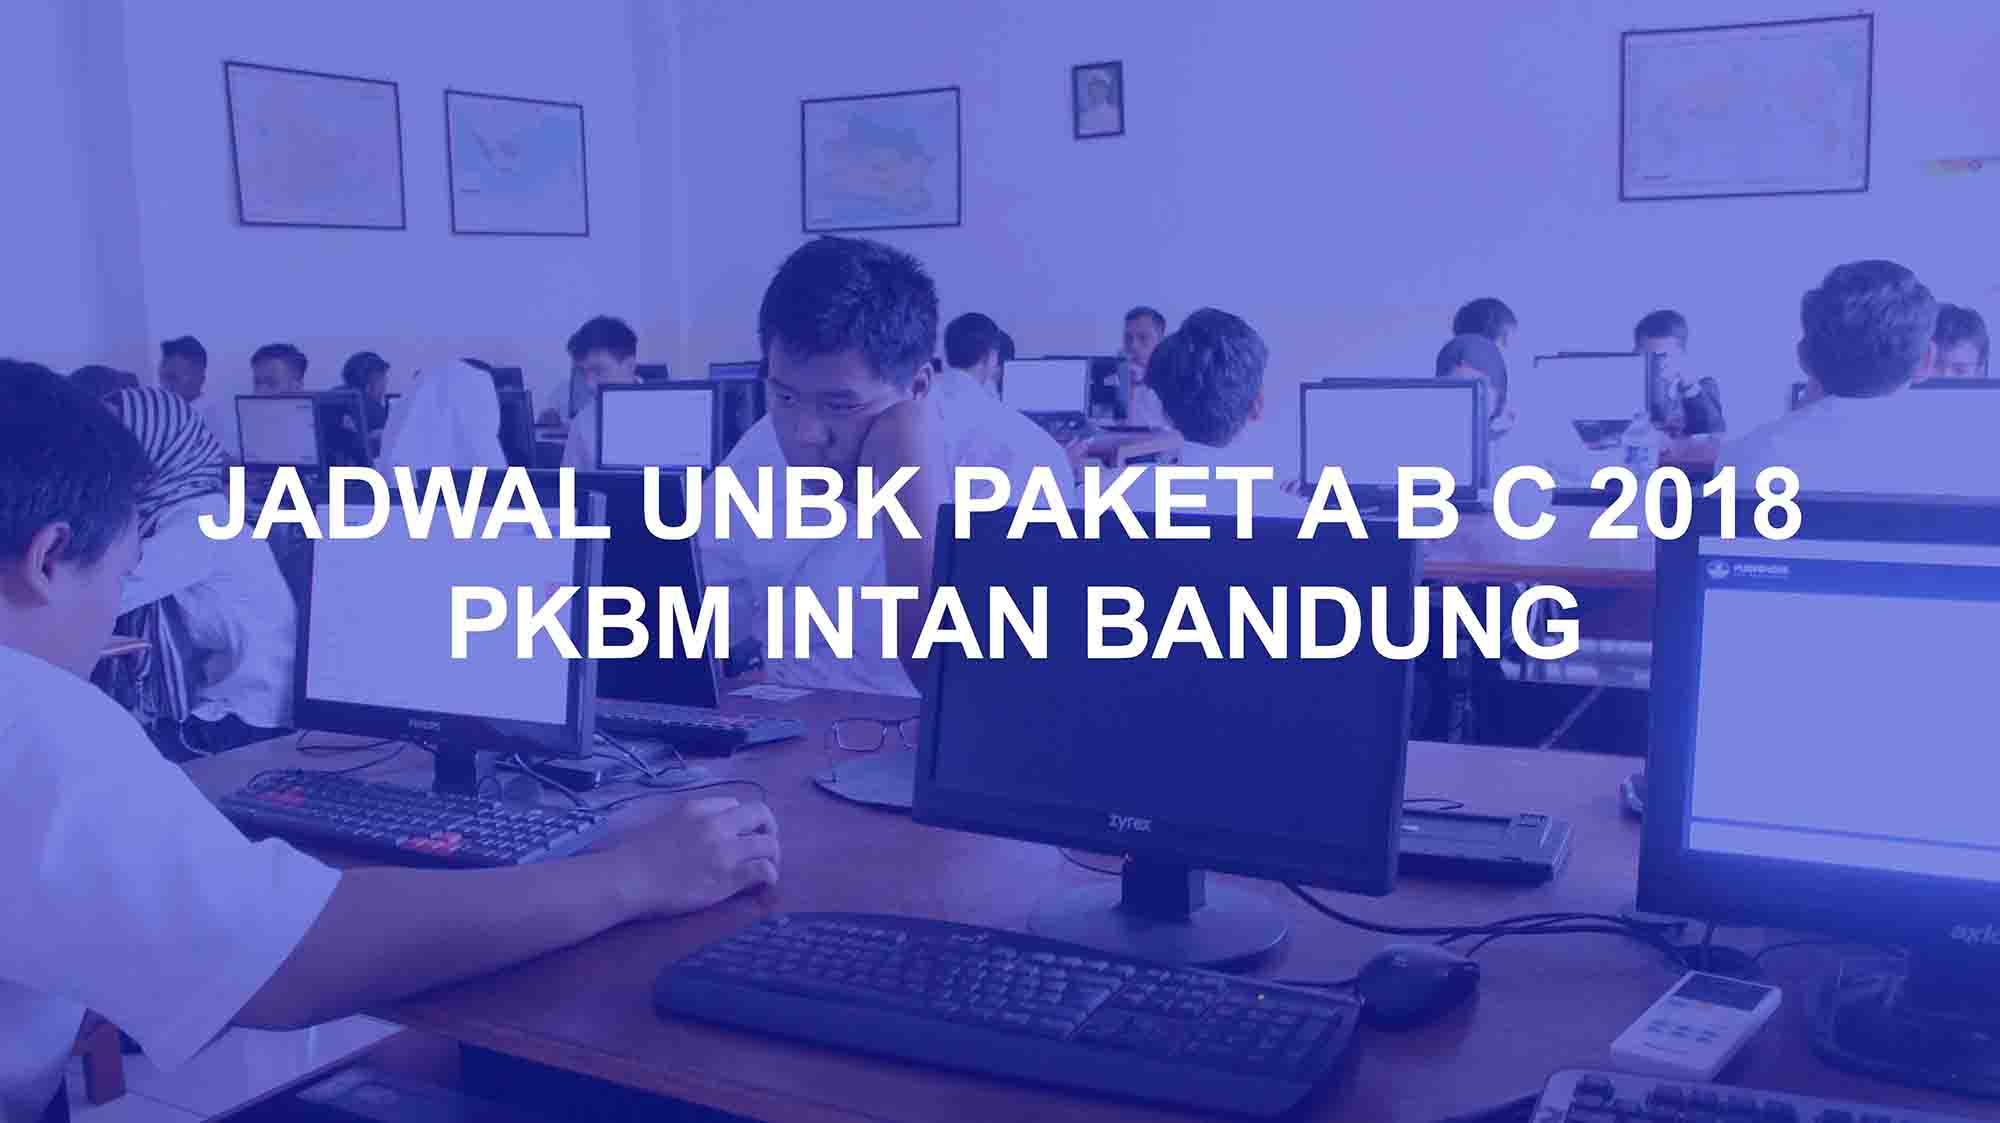 Jadwal UNBK Paket A B C 2018 PKBM INTAN Bandung